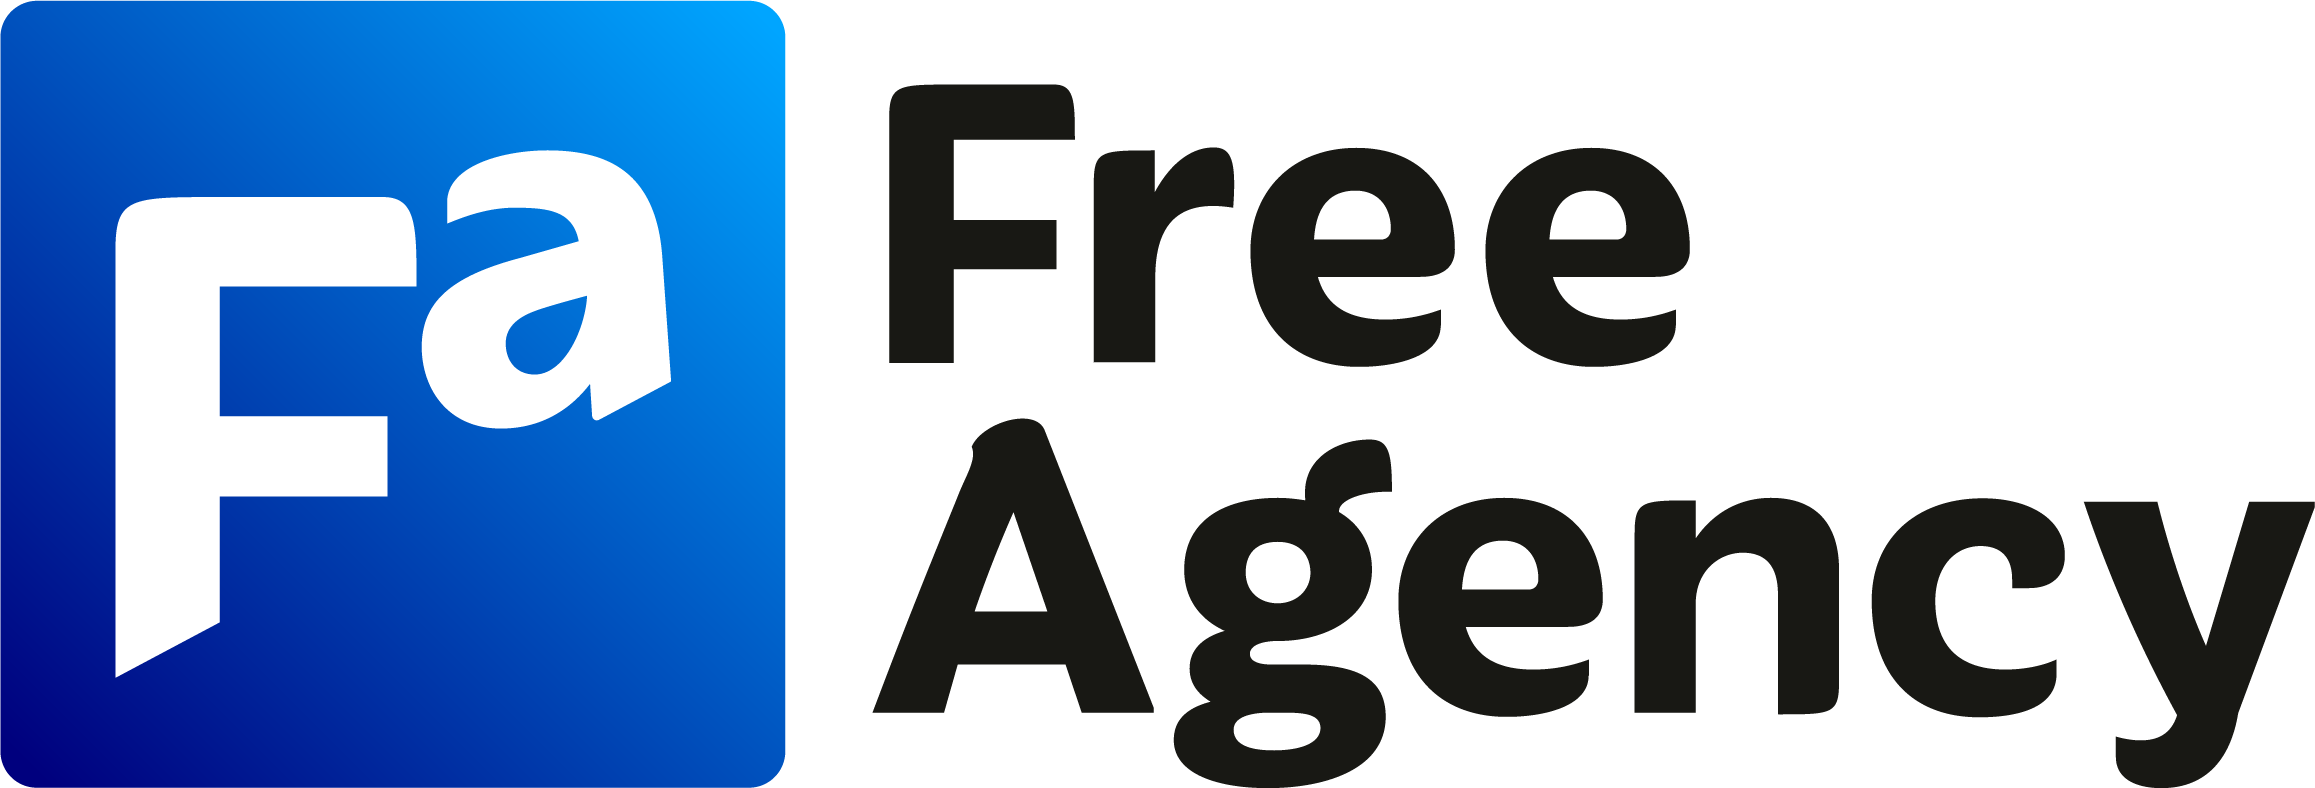 Free-agency